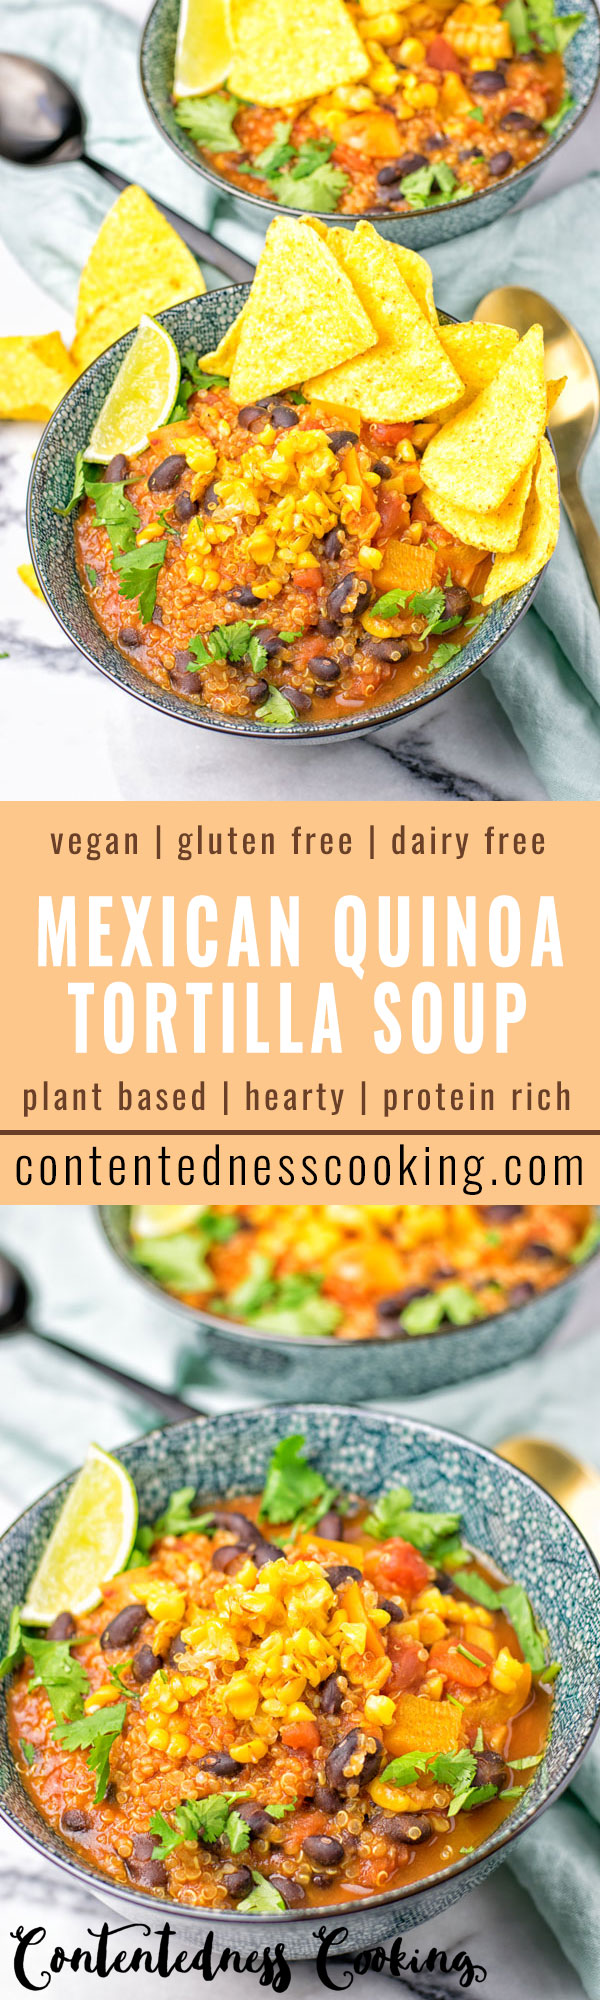 Mexican Quinoa Tortilla Soup #vegan #glutenfree #plantbased #contentednesscooking